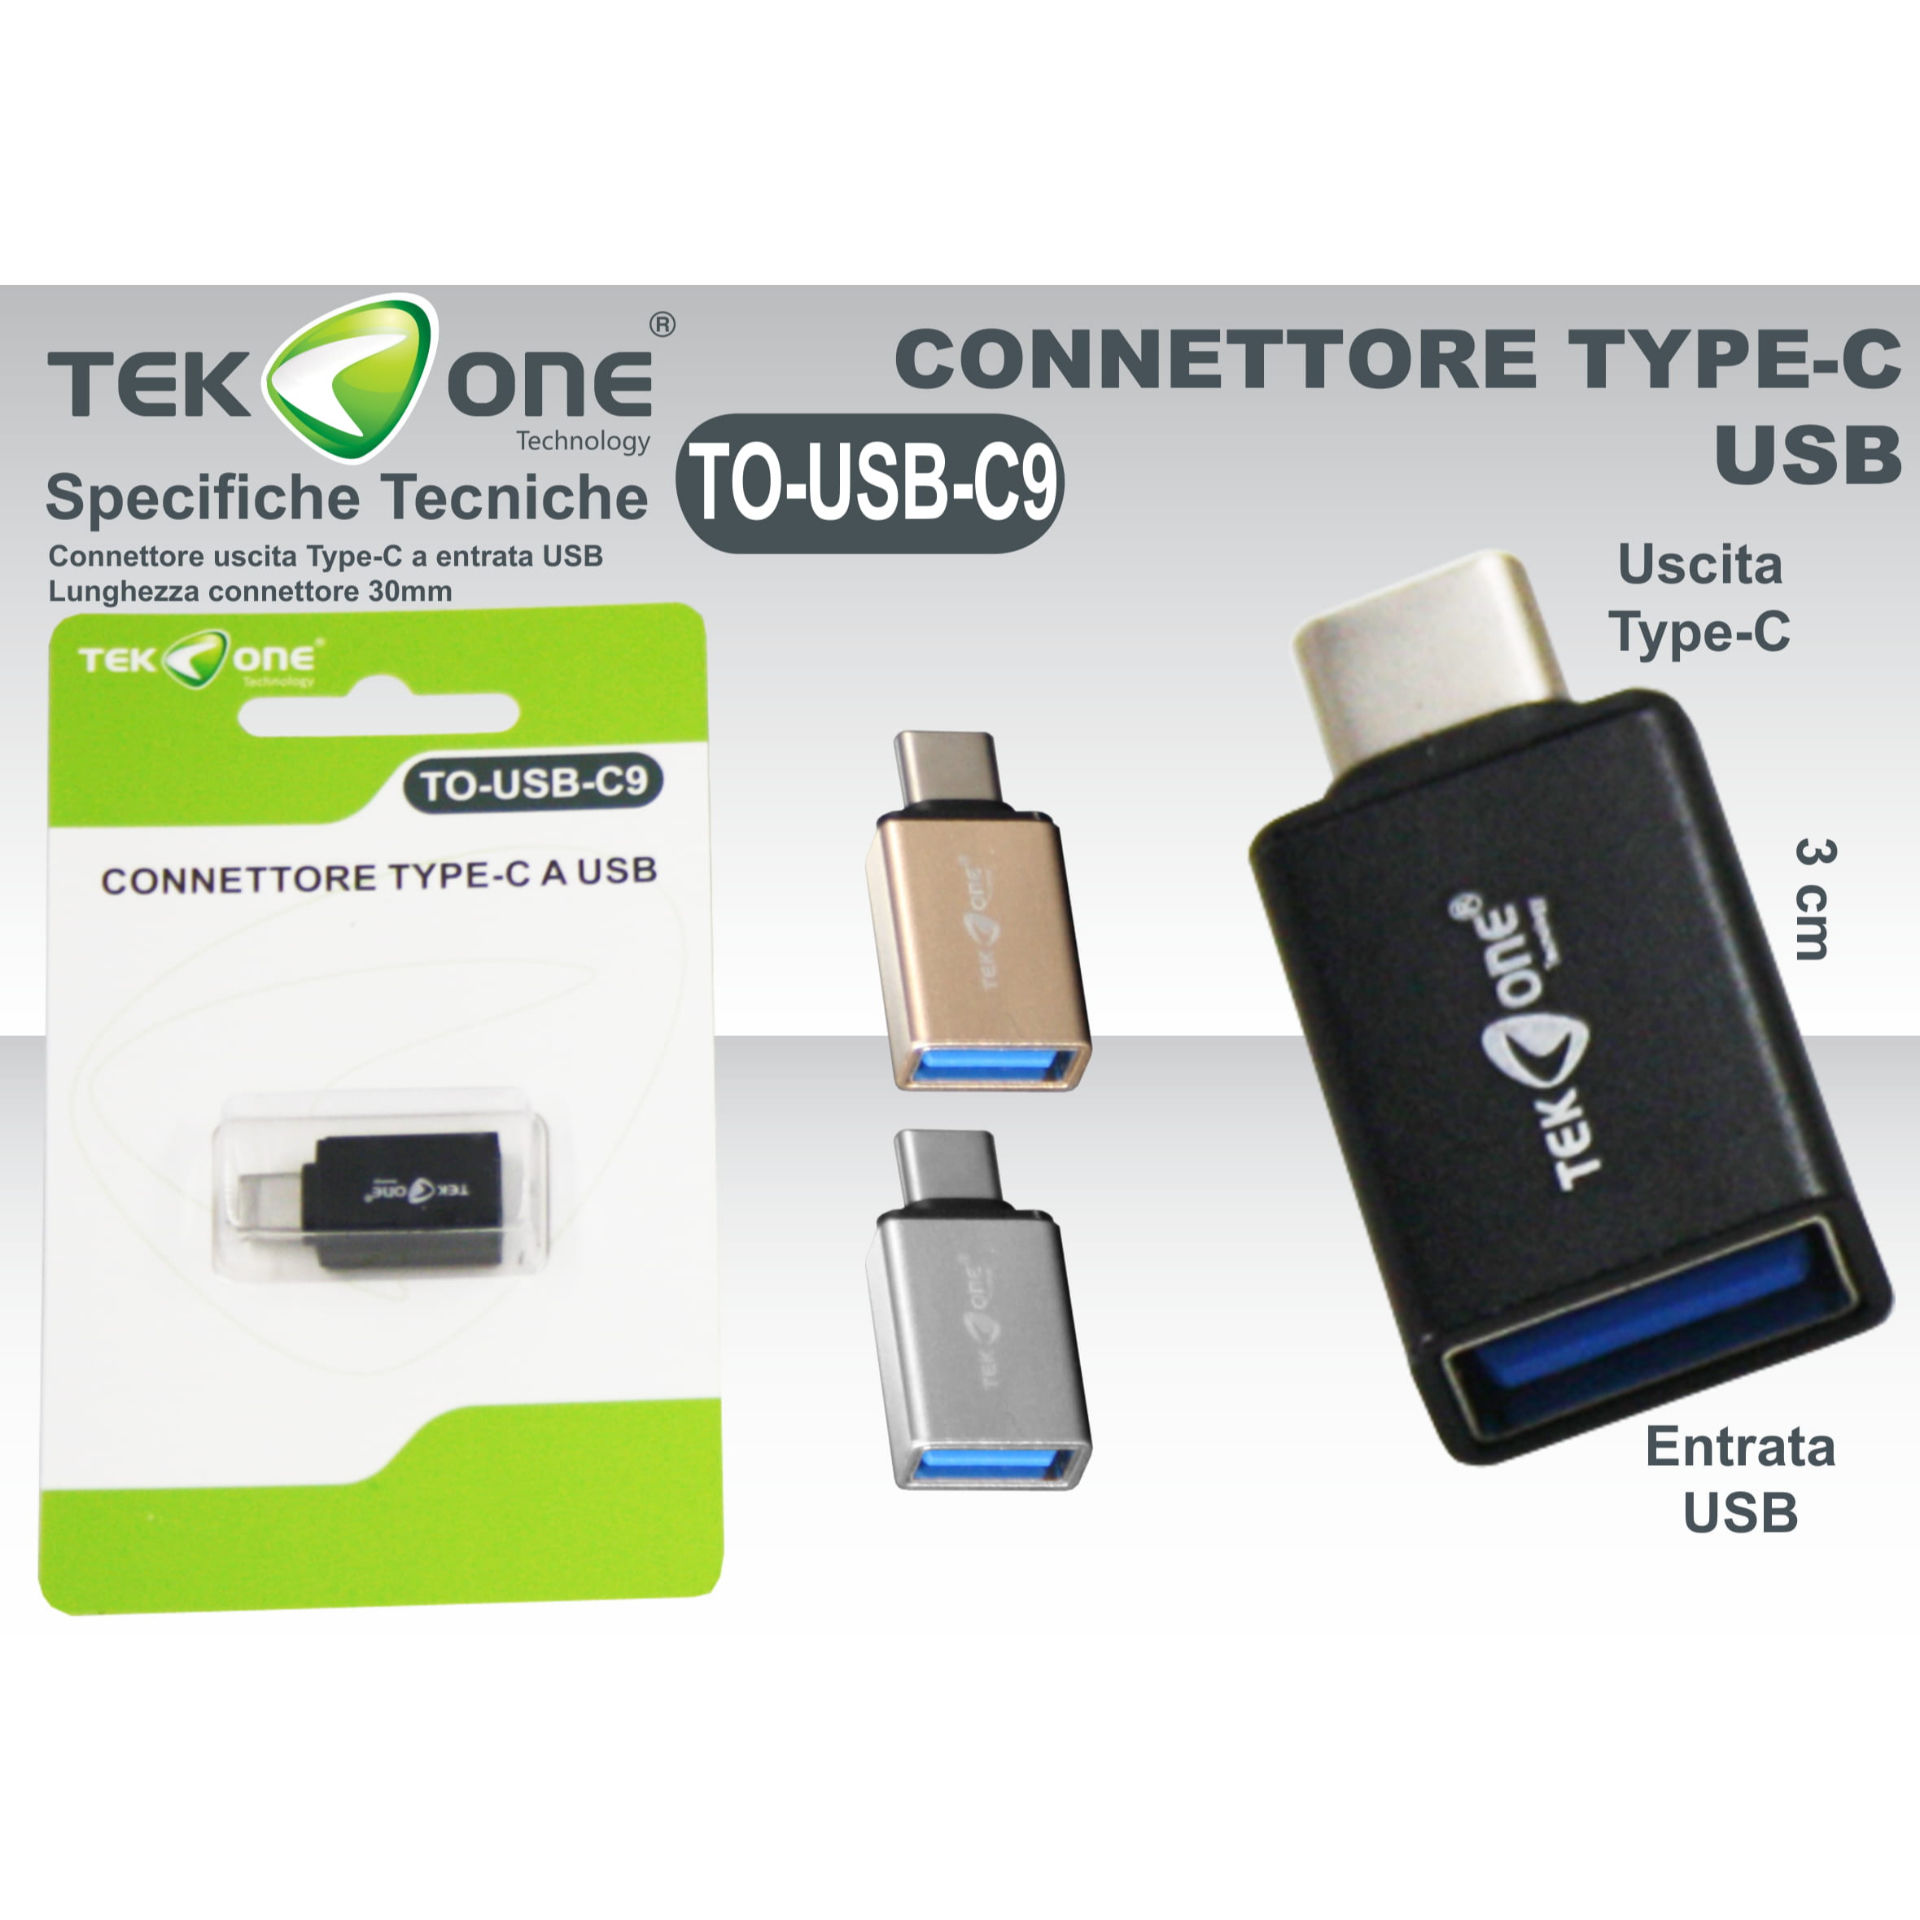 CONNETTORE TYPE-C/USBTekone